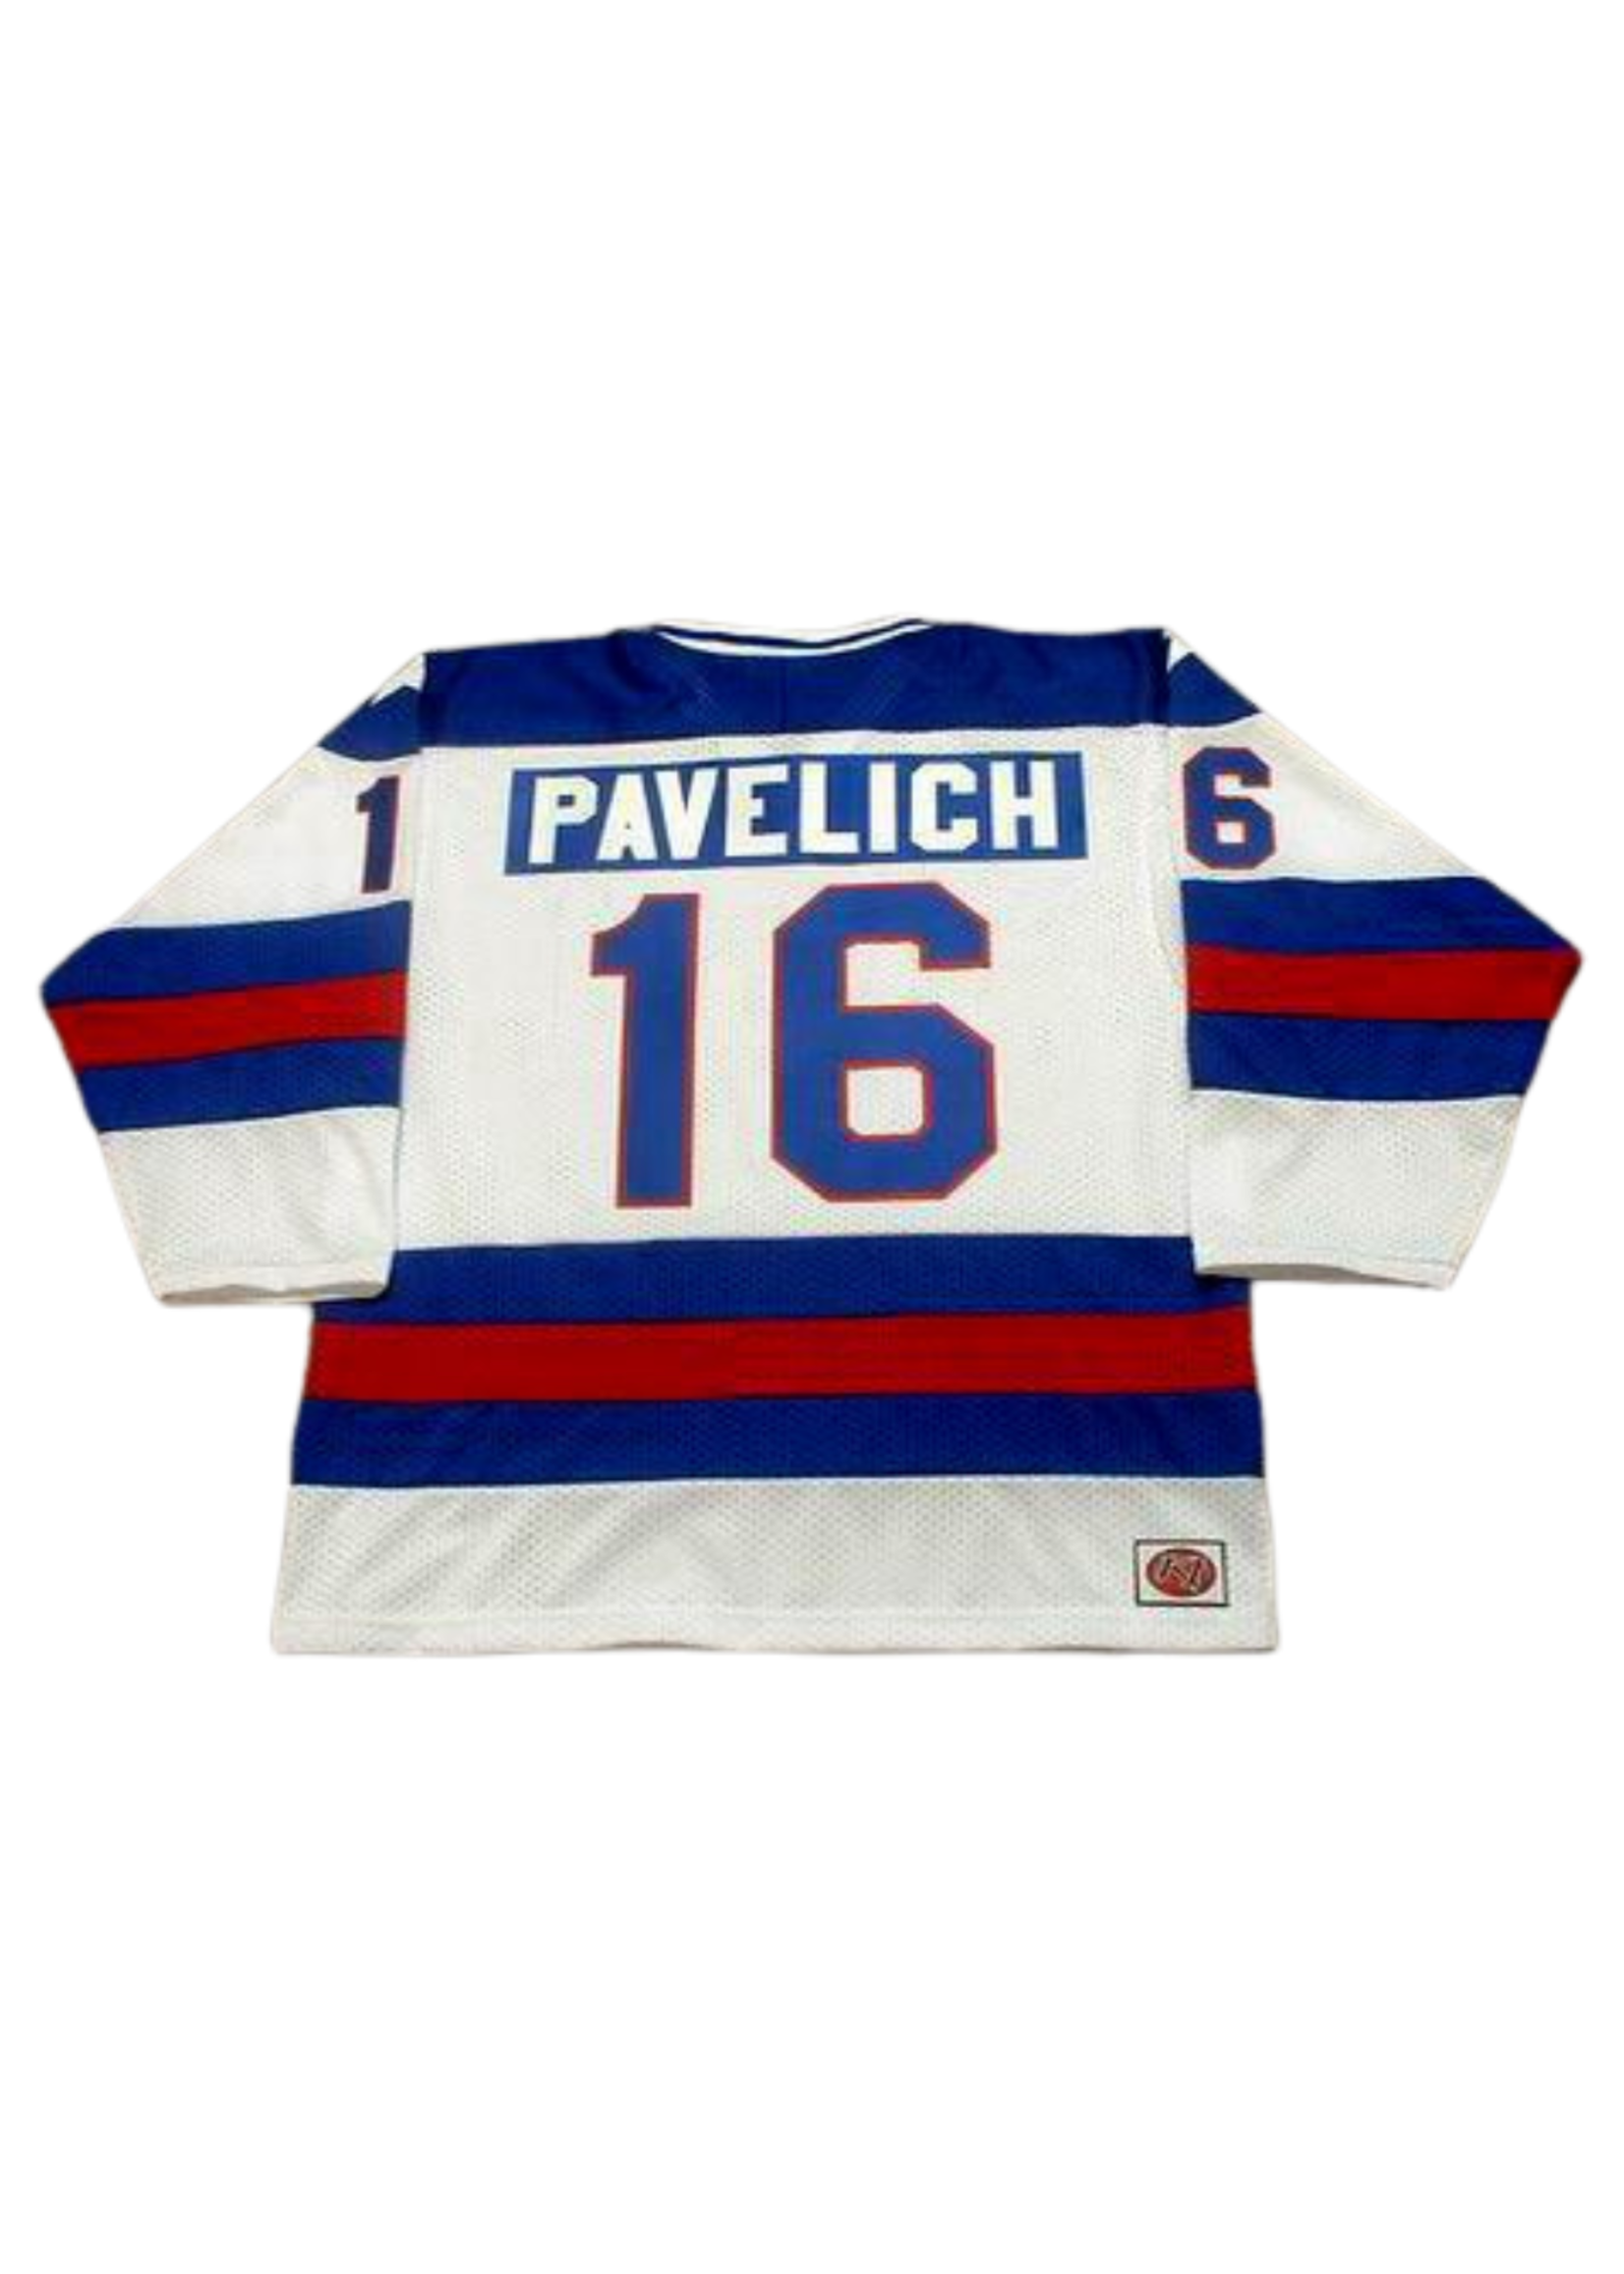 1980 Pavelich #16 Jersey